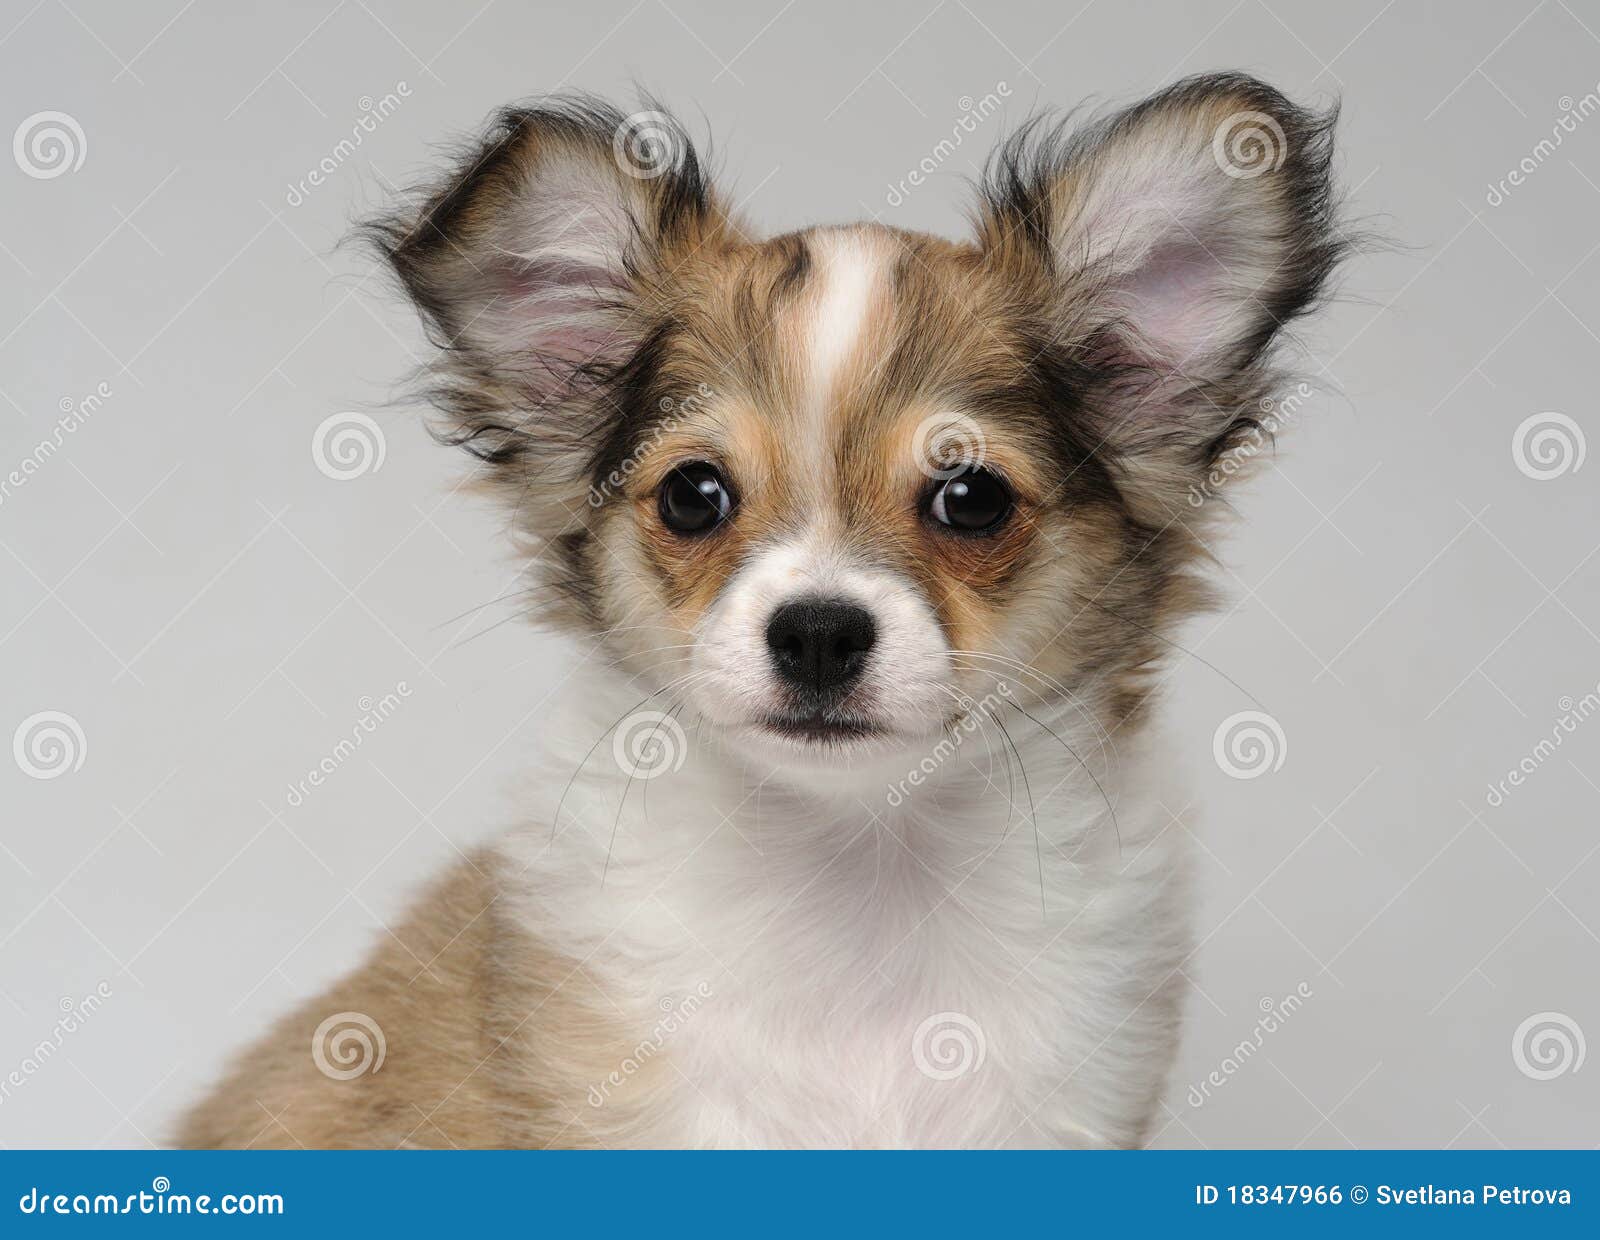 close-up portrait of cute chihuahua puppy